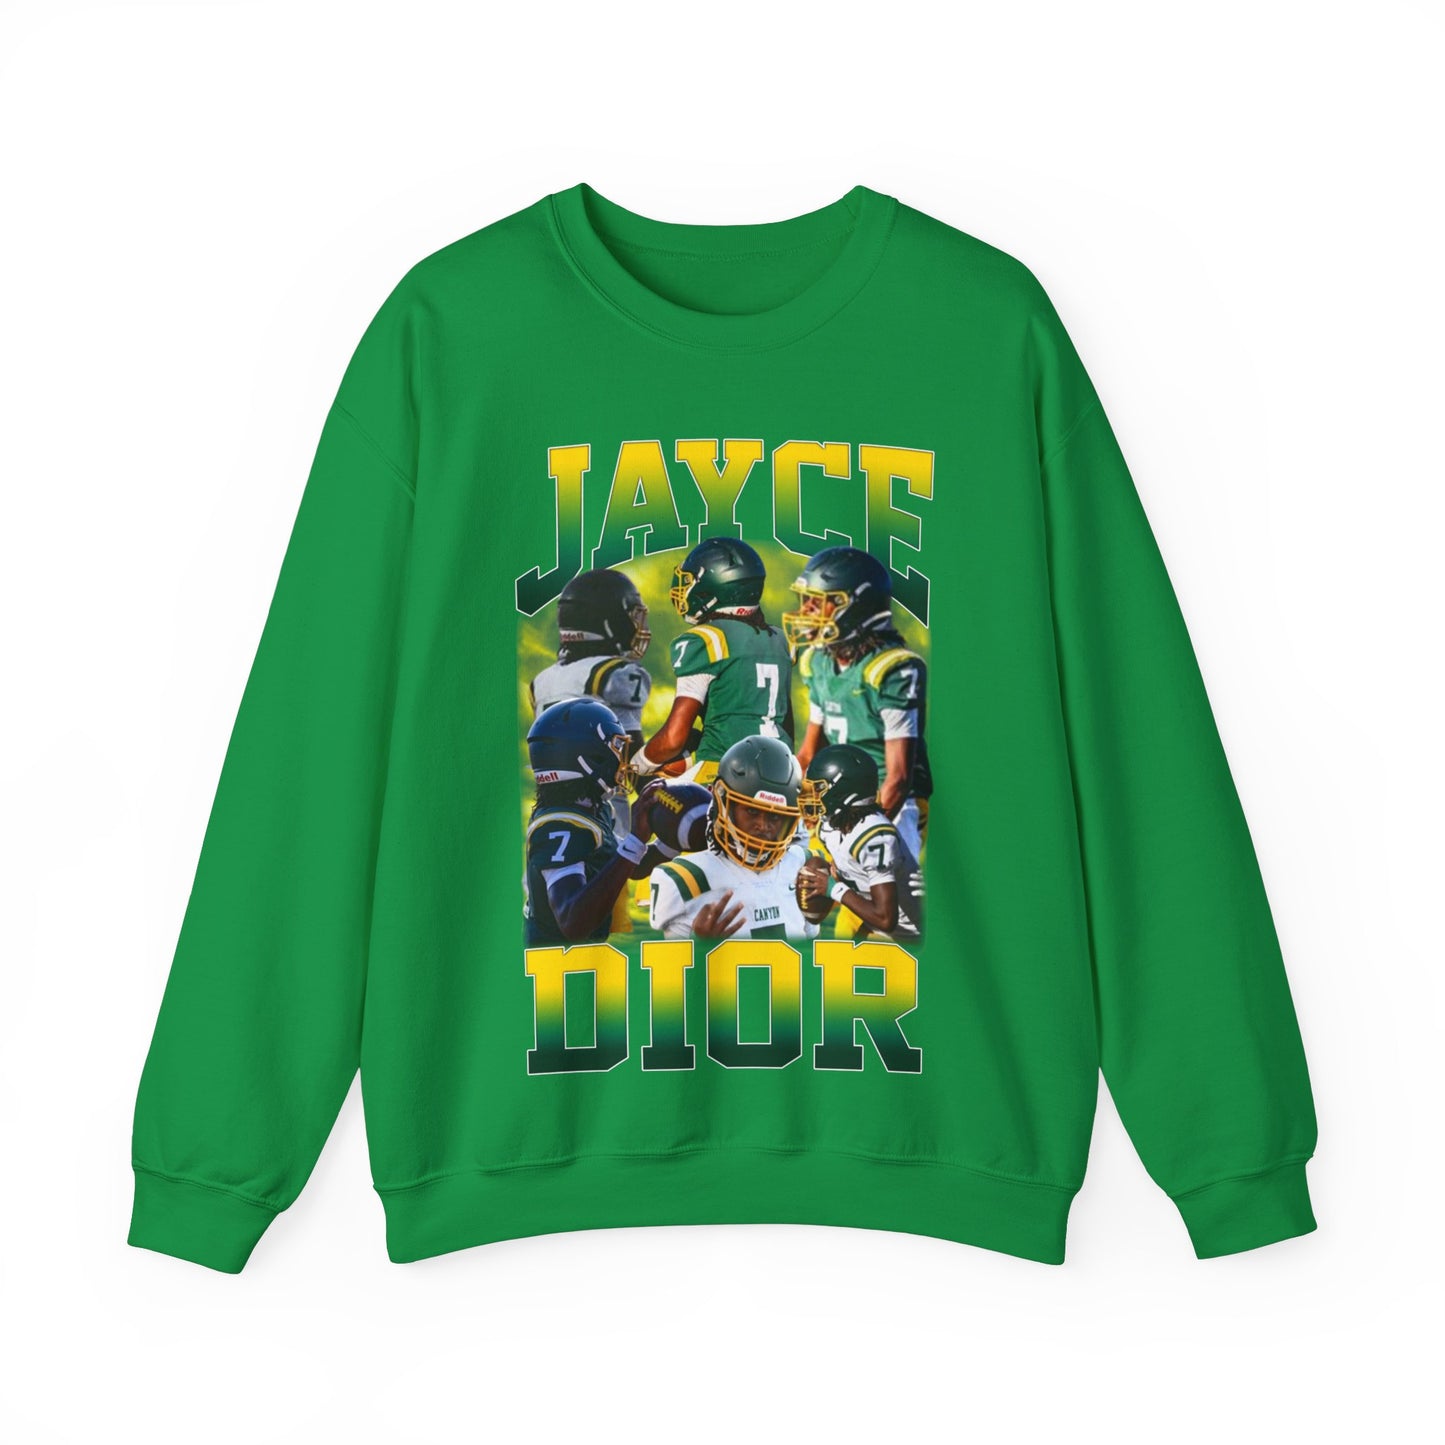 Jayce Dior Crewneck Sweatshirt